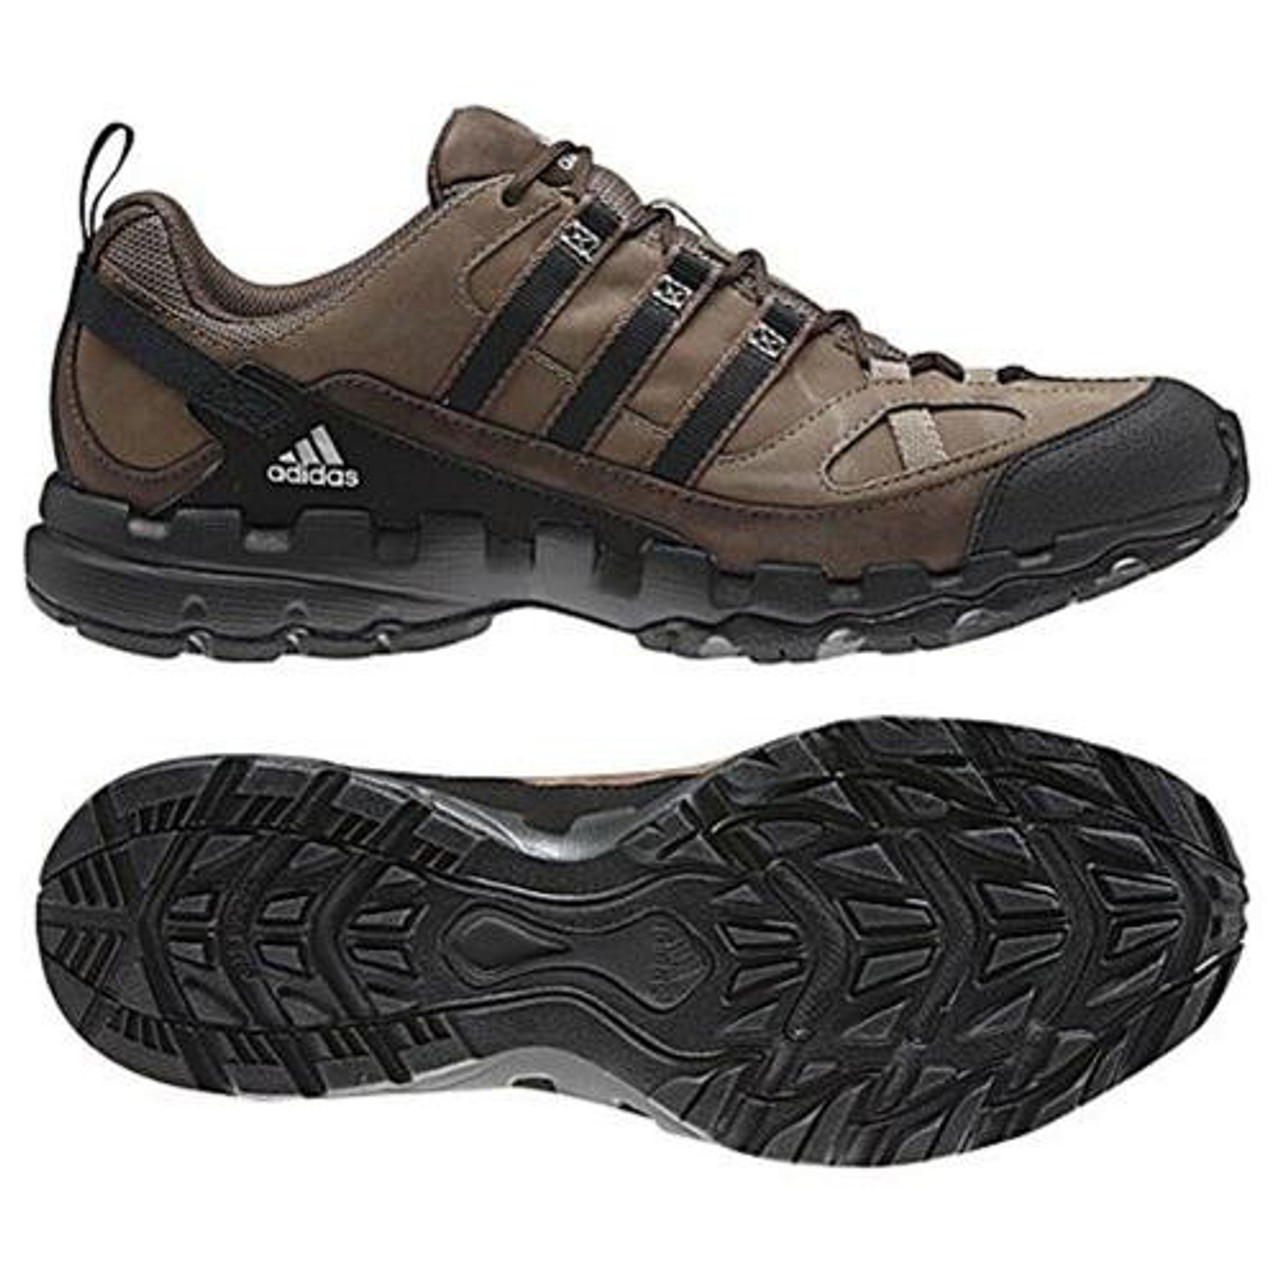 Adidas AX 1 Leather Espresso Mens Hiking Shoes - Espresso/Black | Discount Adidas Men's Athletic Shoes & More - |